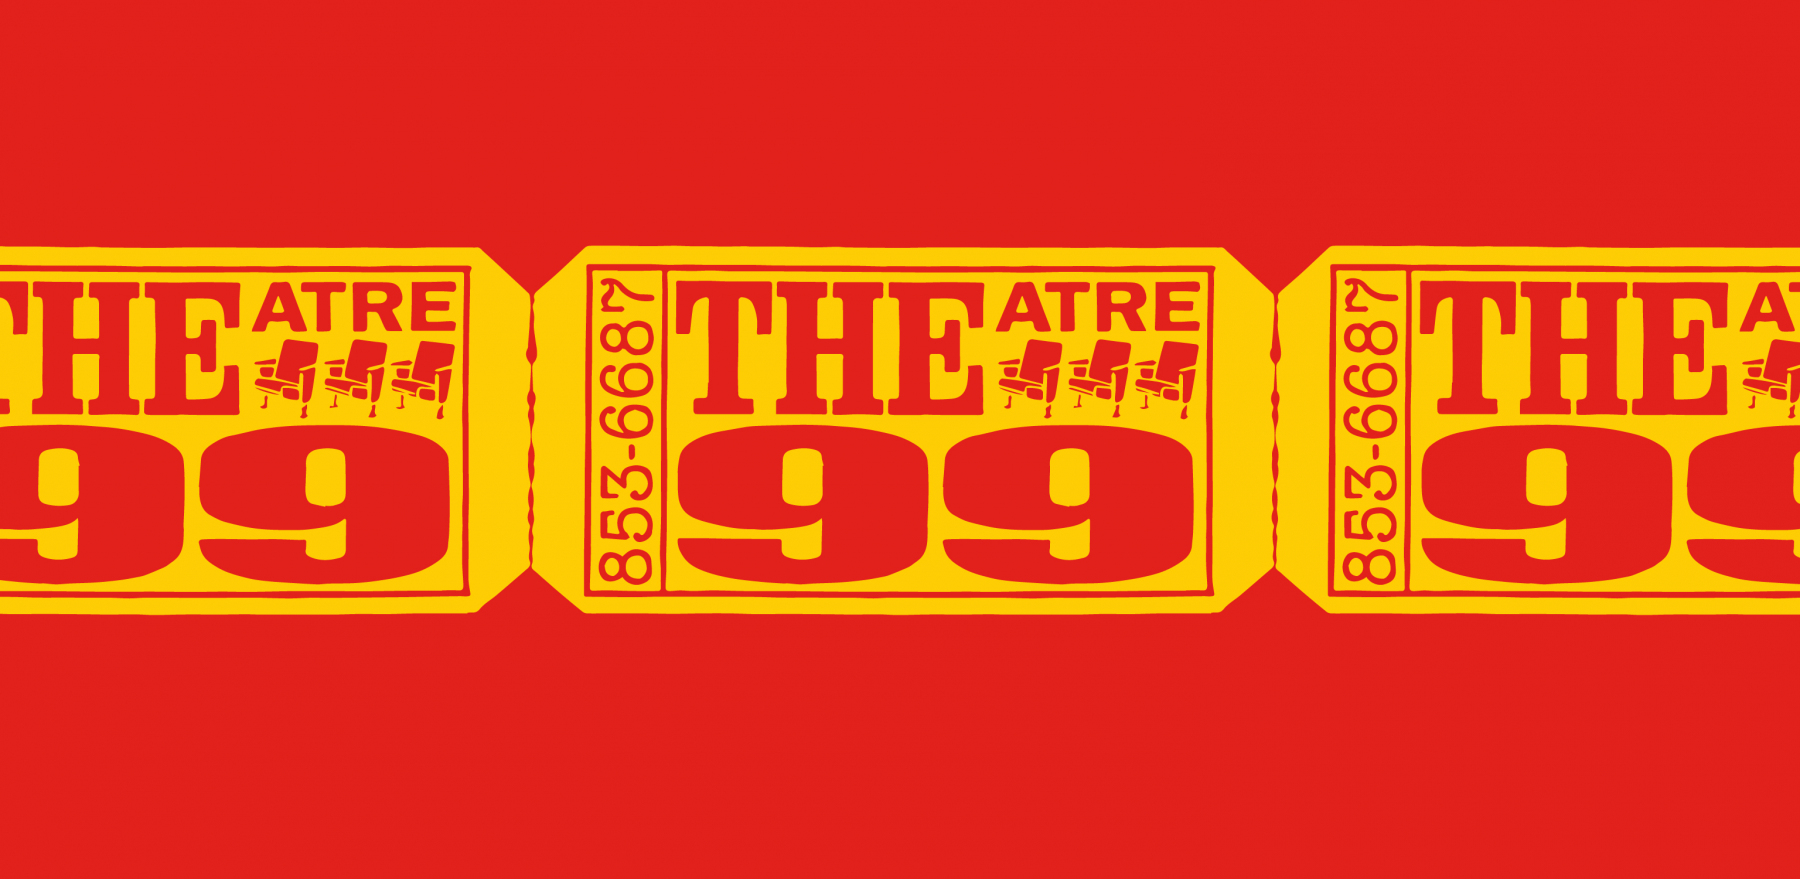 Theatre 99